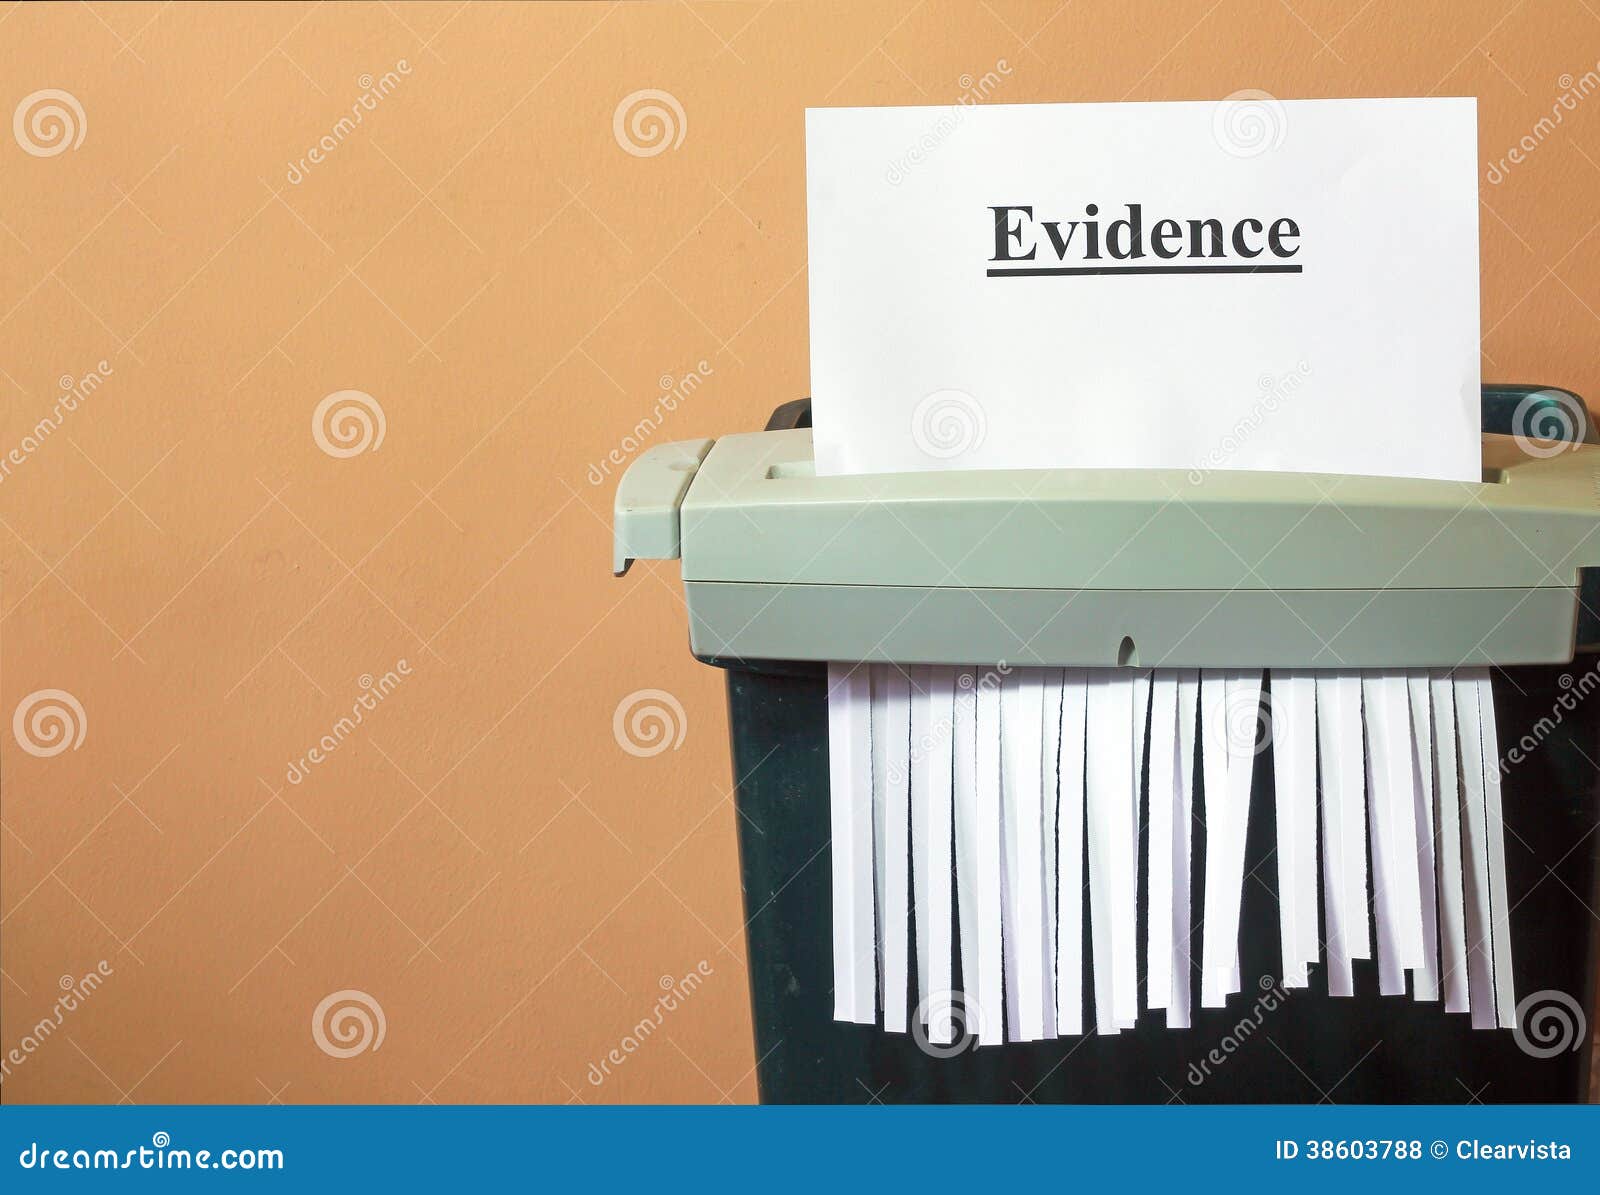 shredding-evidence-hiding-truth-being-shredded-machine-to-hide-possibly-investigation-corruption-38603788.jpg